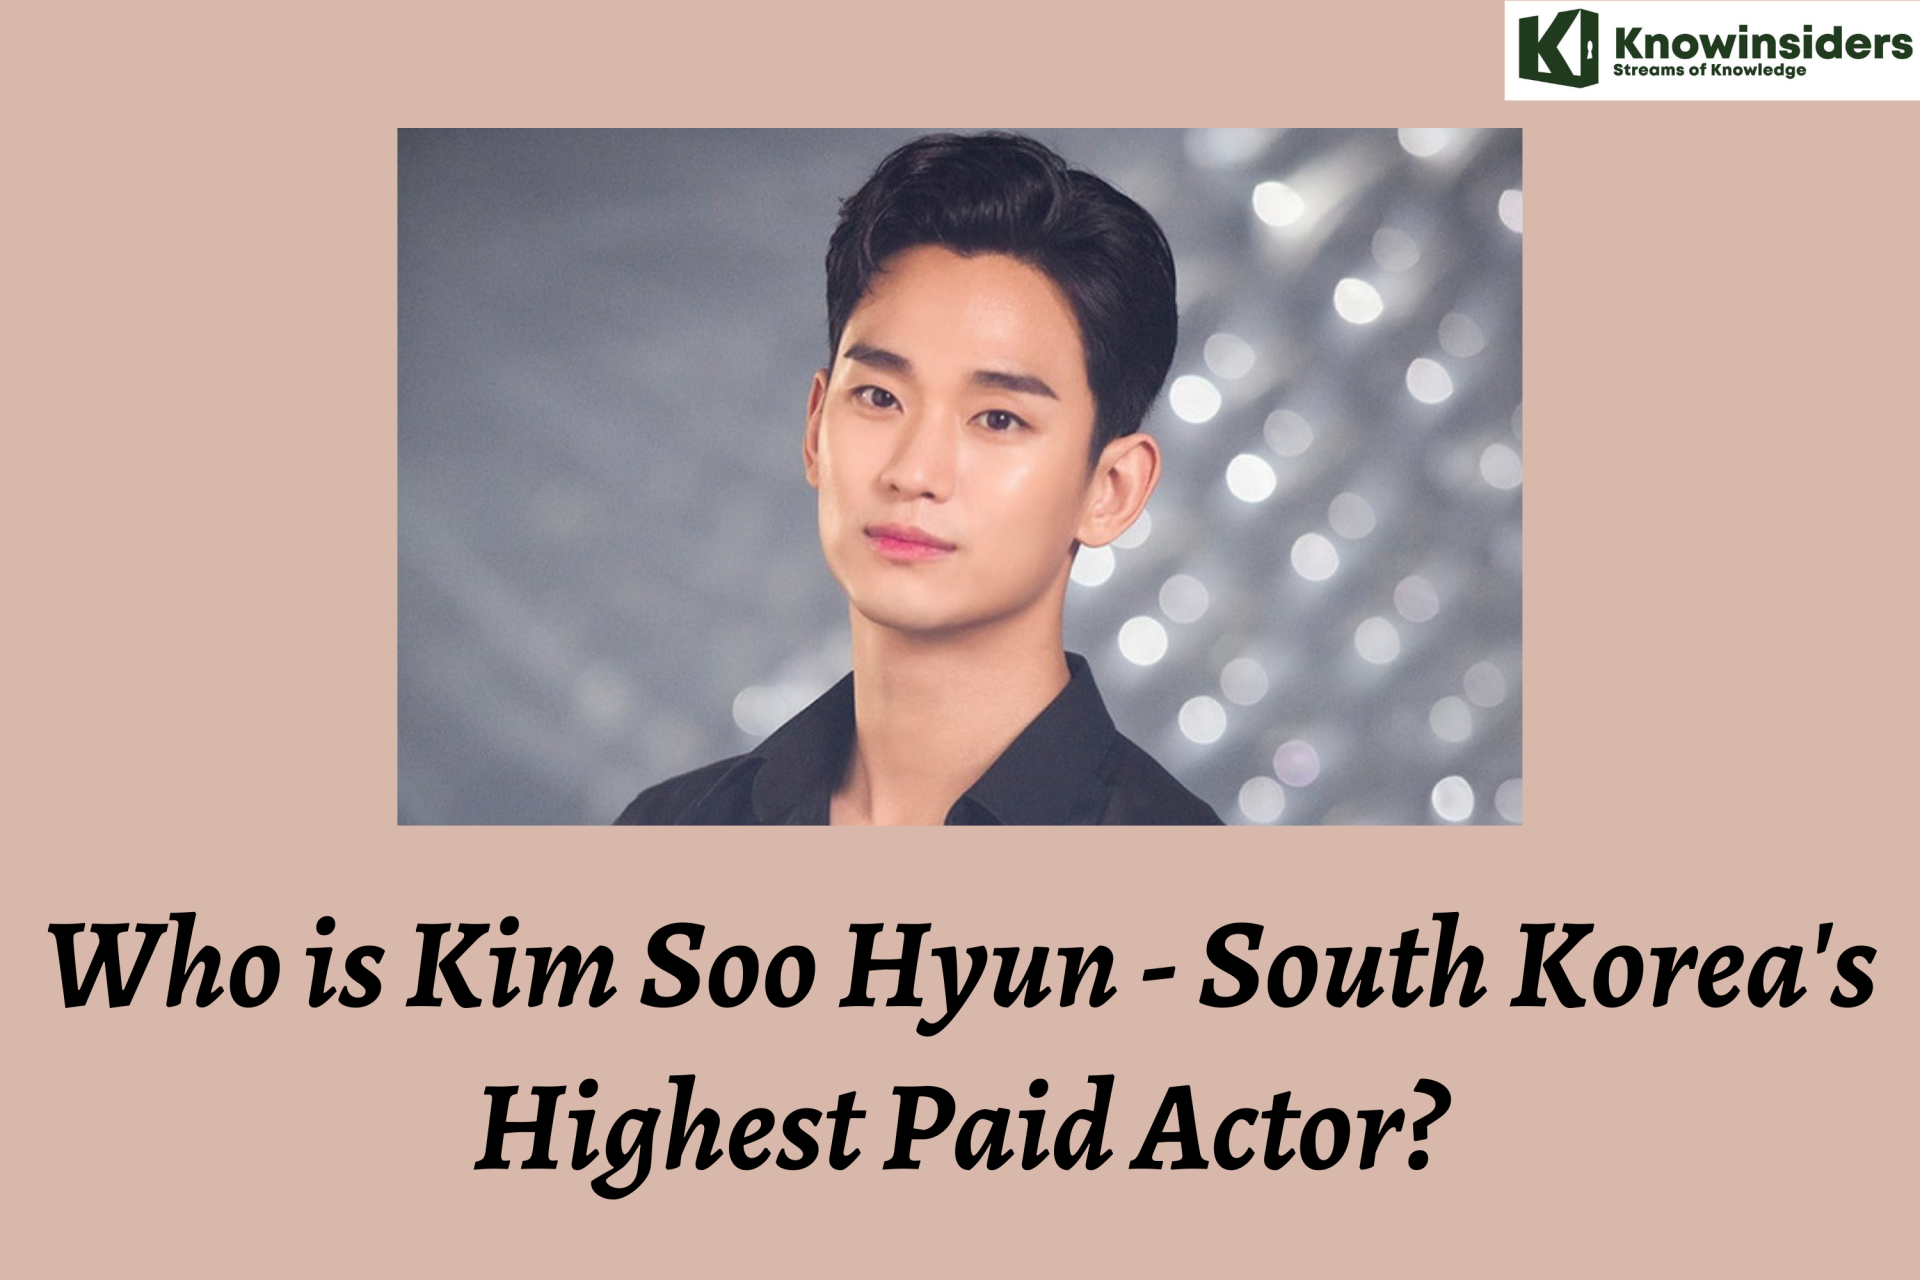 Who is Kim Soo Hyun - South Korea